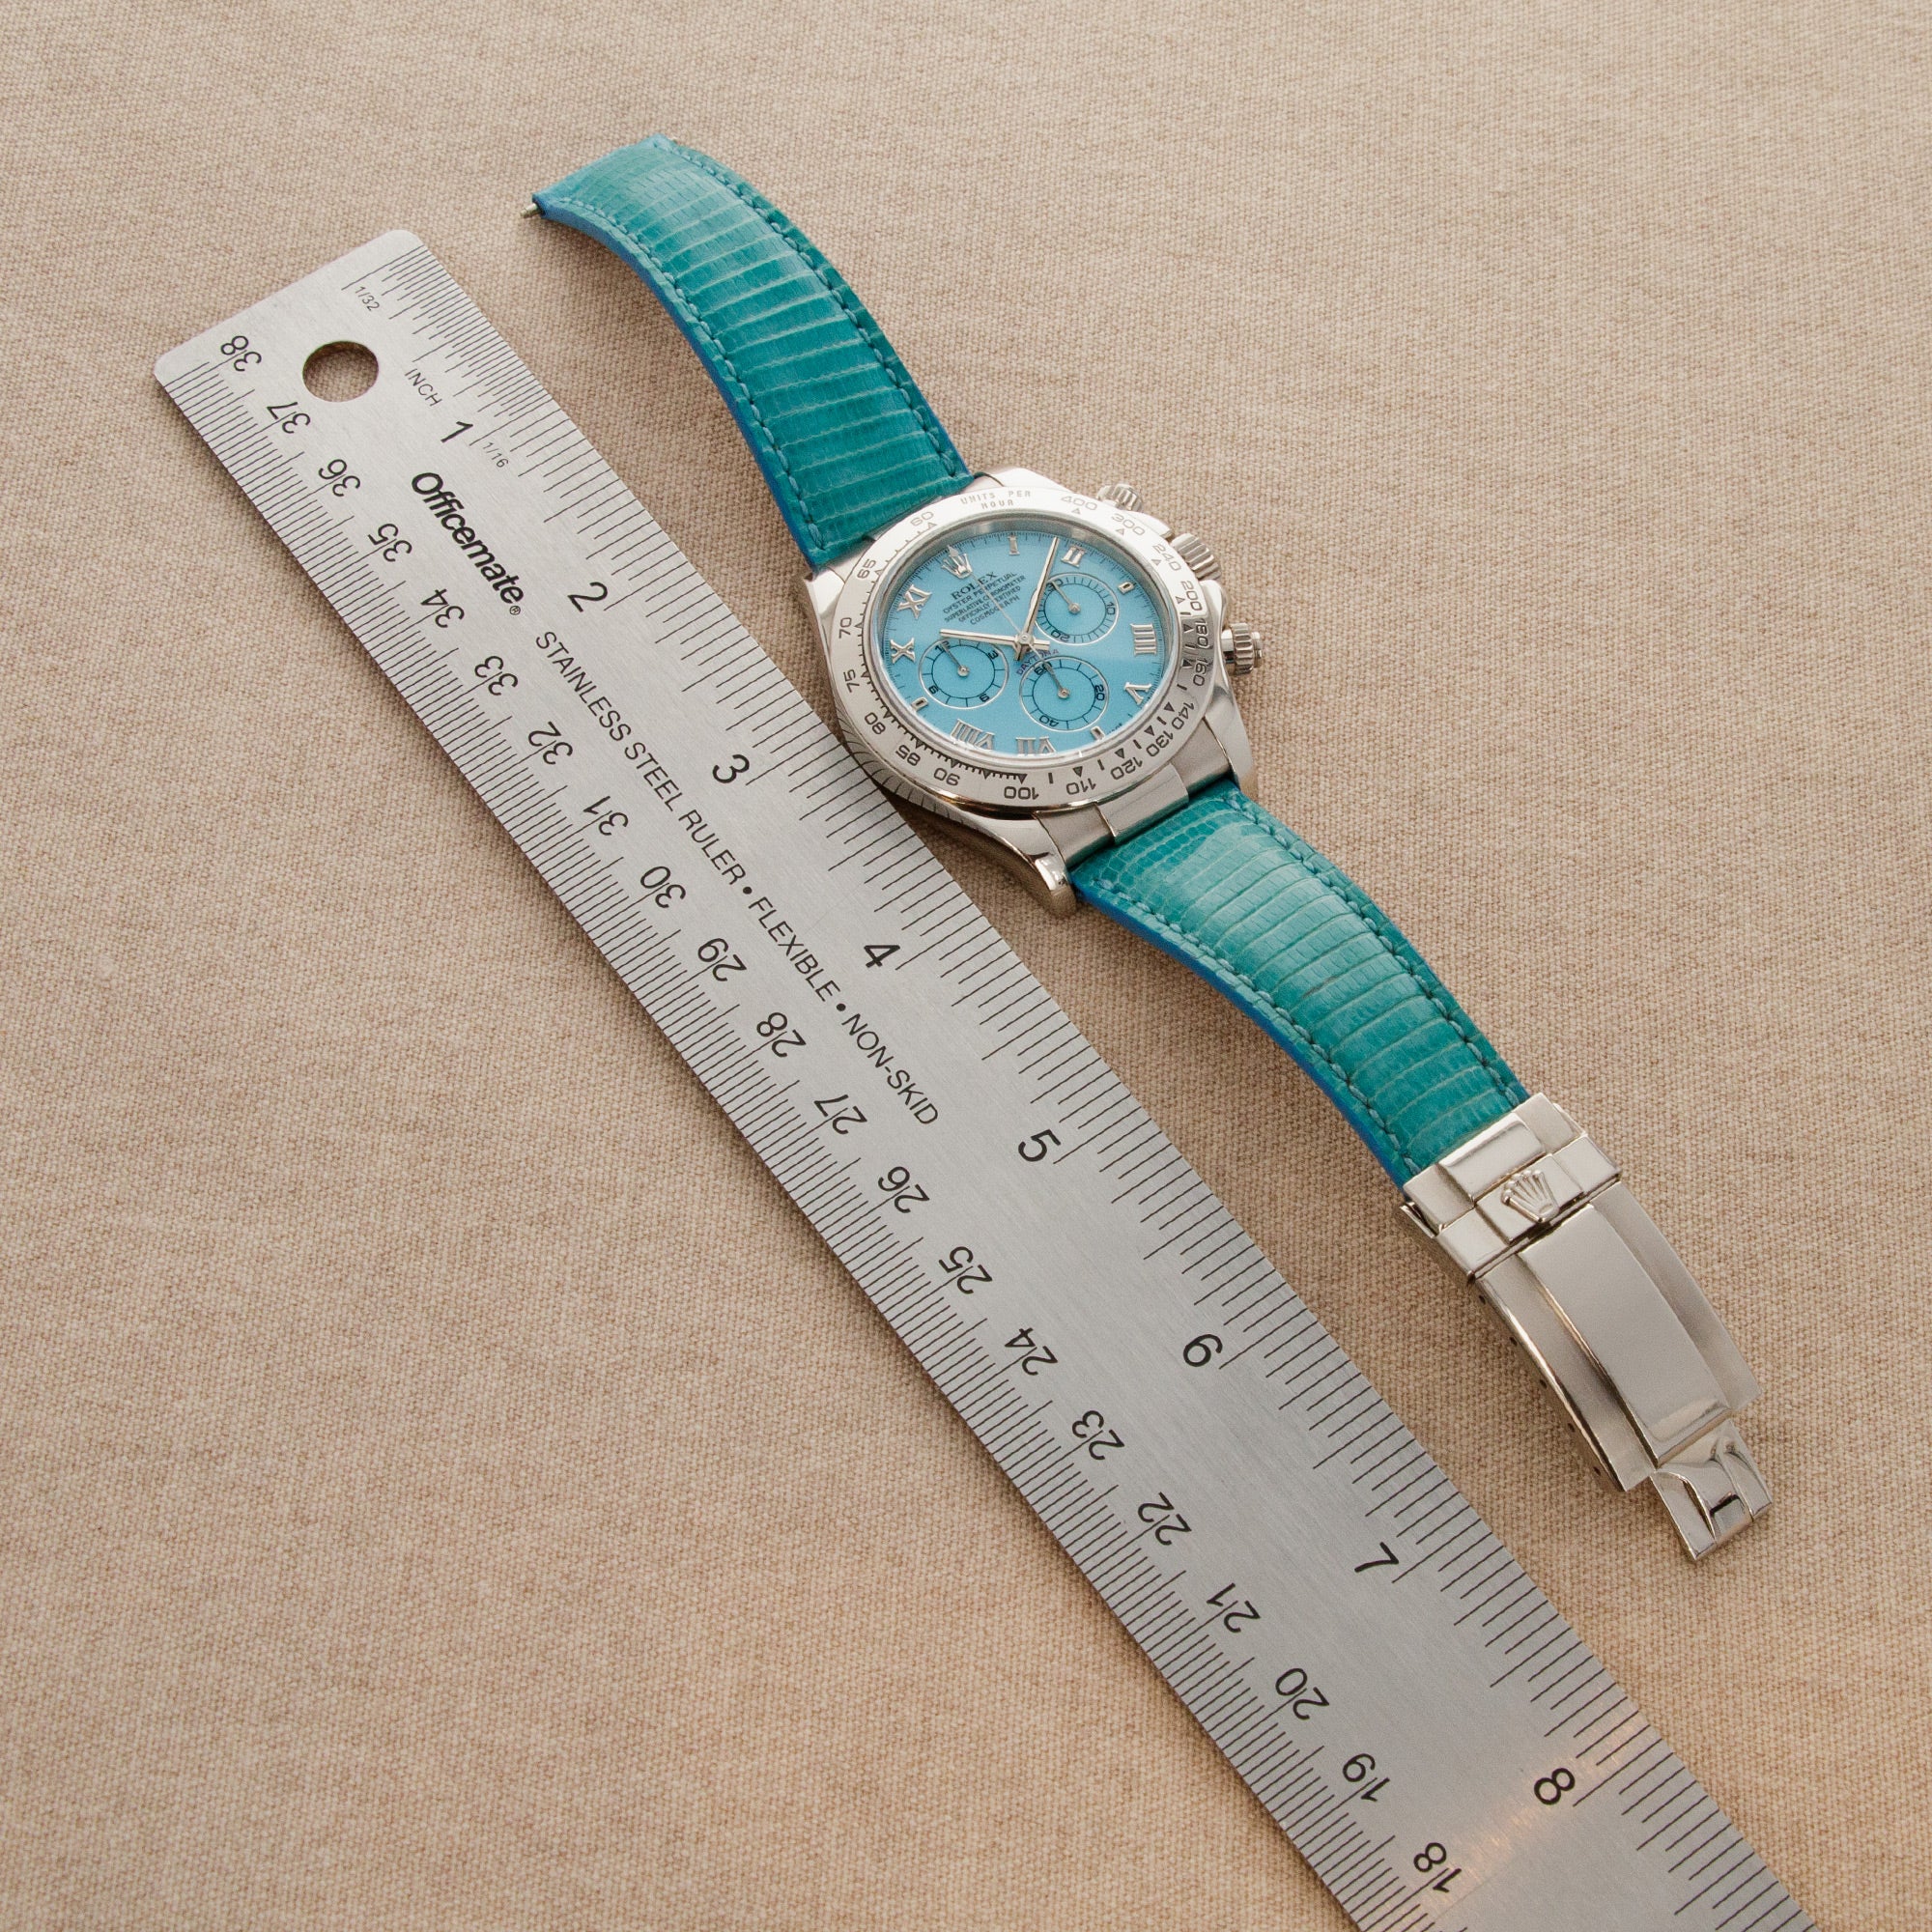 Rolex - Rolex Cosmograph Daytona Blue Beach Watch Ref. 116519 - The Keystone Watches